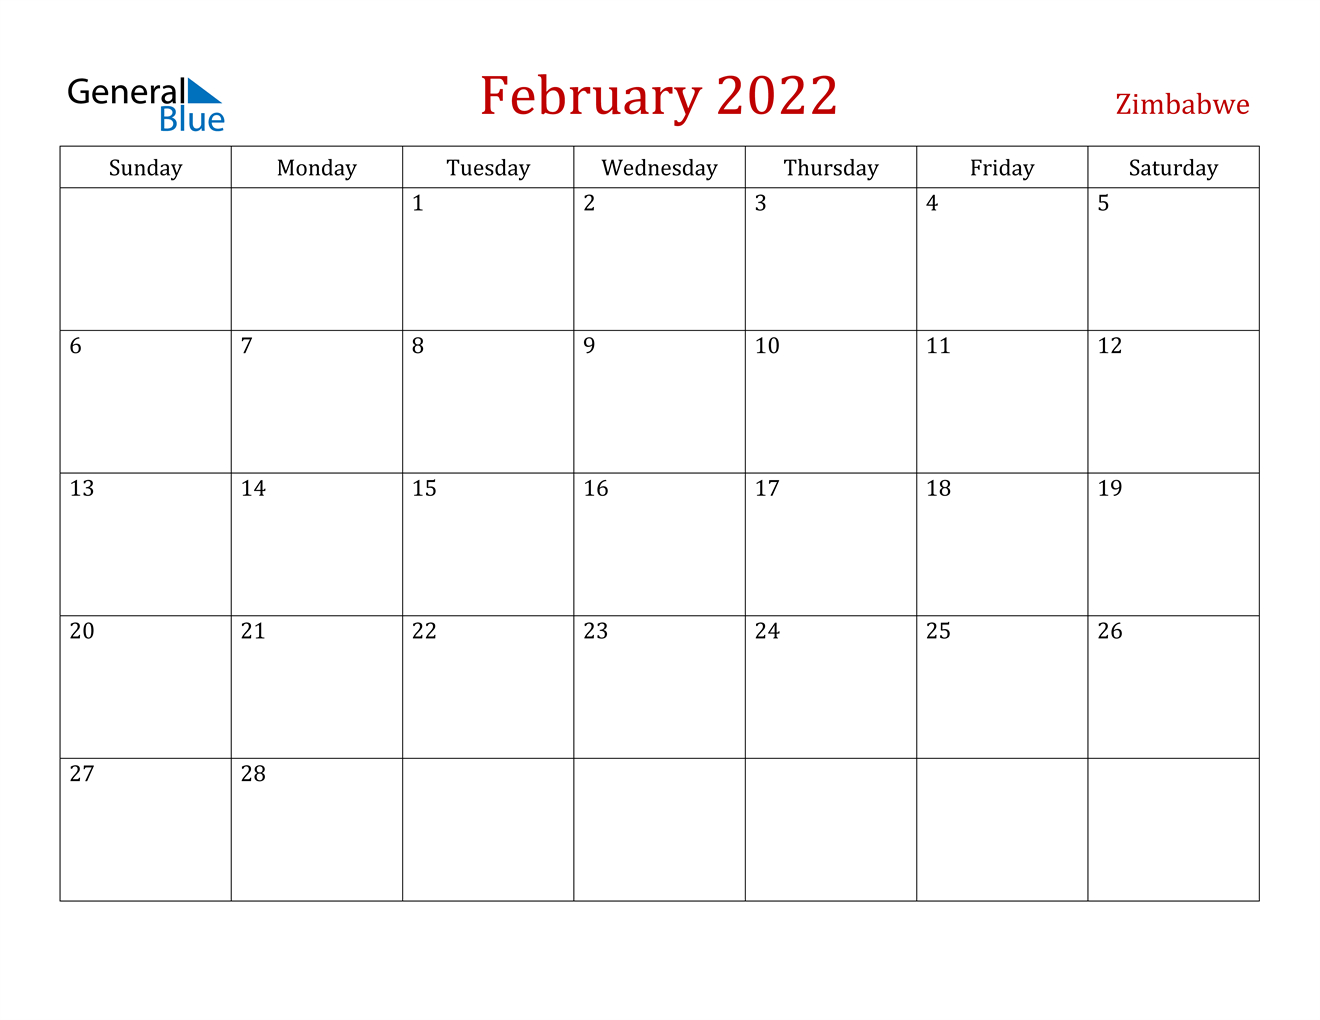 February 2022 Calendar - Zimbabwe